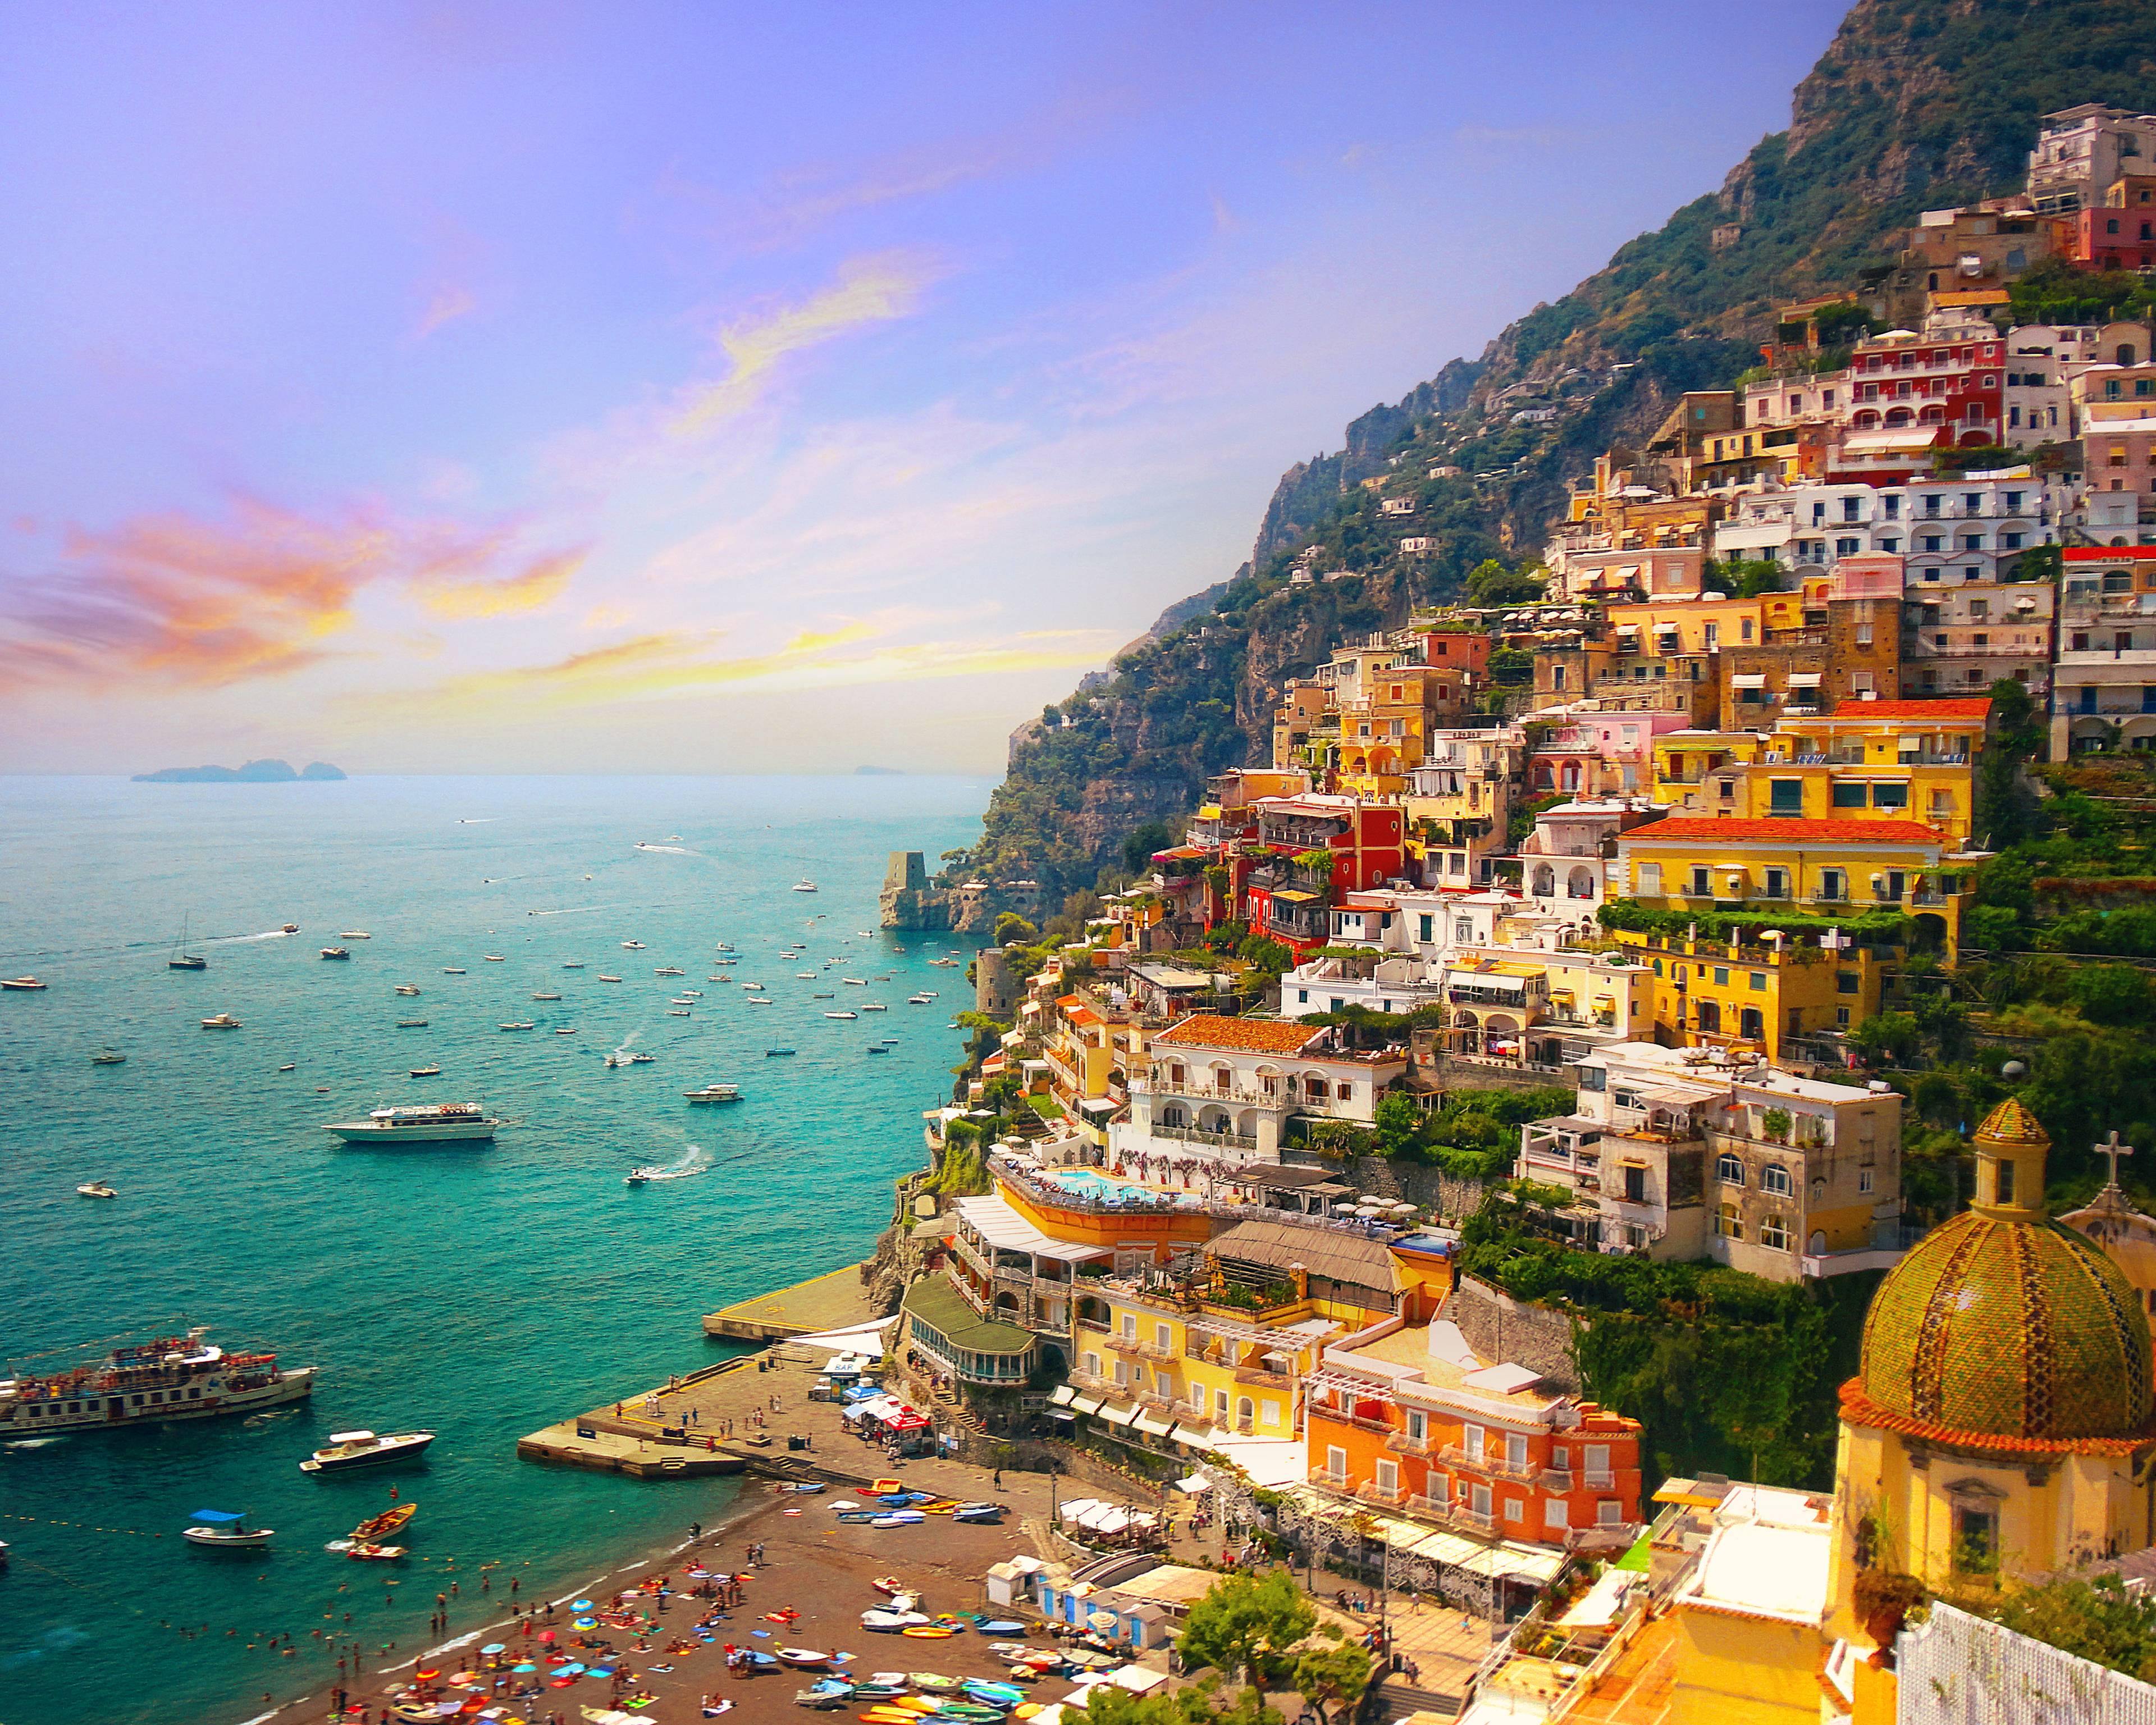 Descubre la belleza única de la Costa Amalfitana